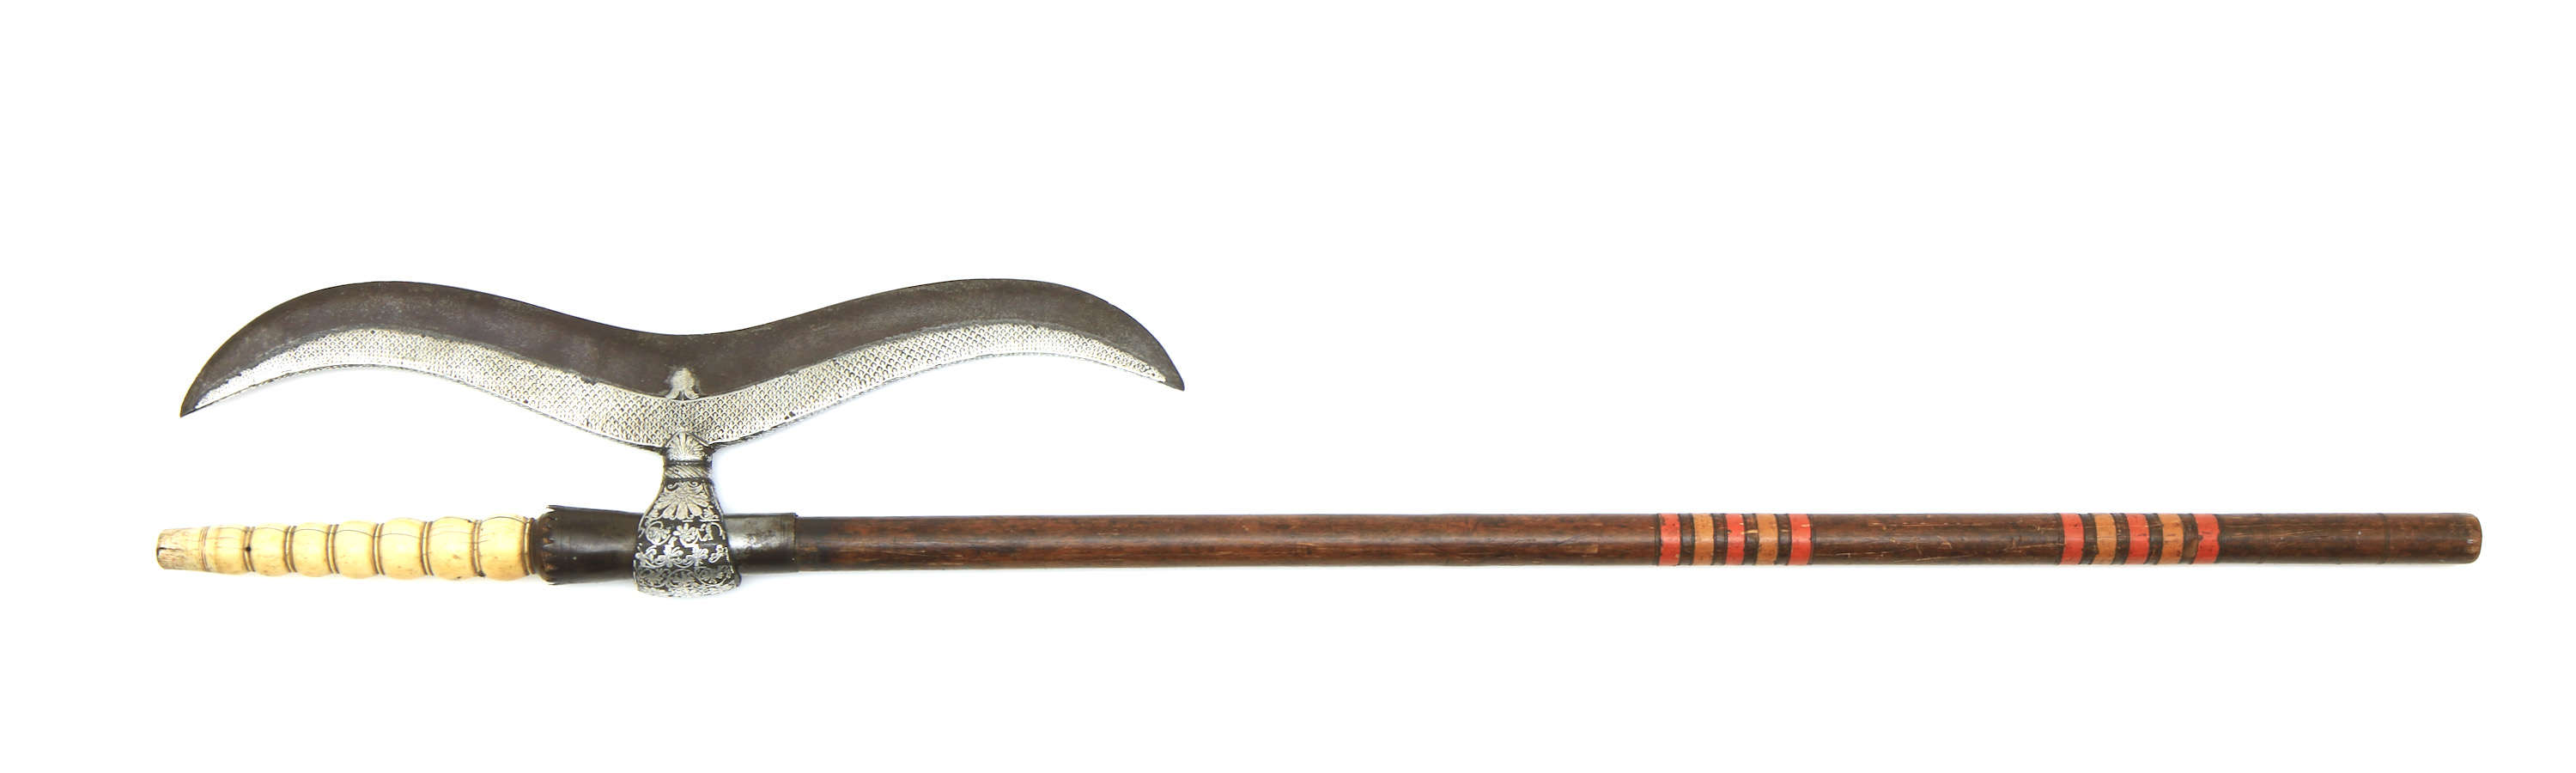 Bullova battle axe of the Khond people of India